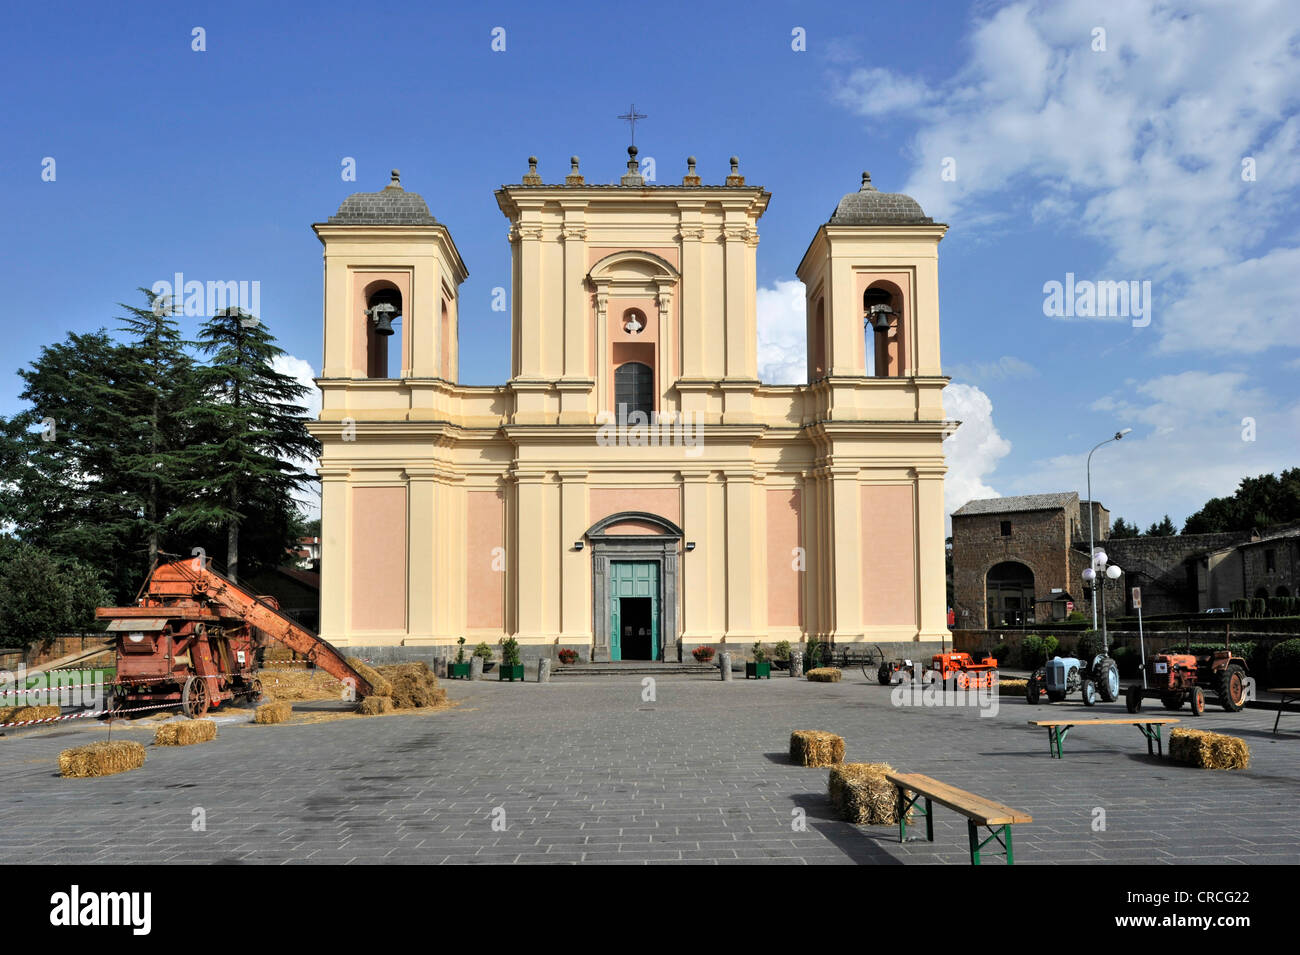 Cathedral of St. Sepulchre, Basilica Cattedrale di San Sepolcro, Aquapendente, Lazio, Italy, Europe Stock Photo